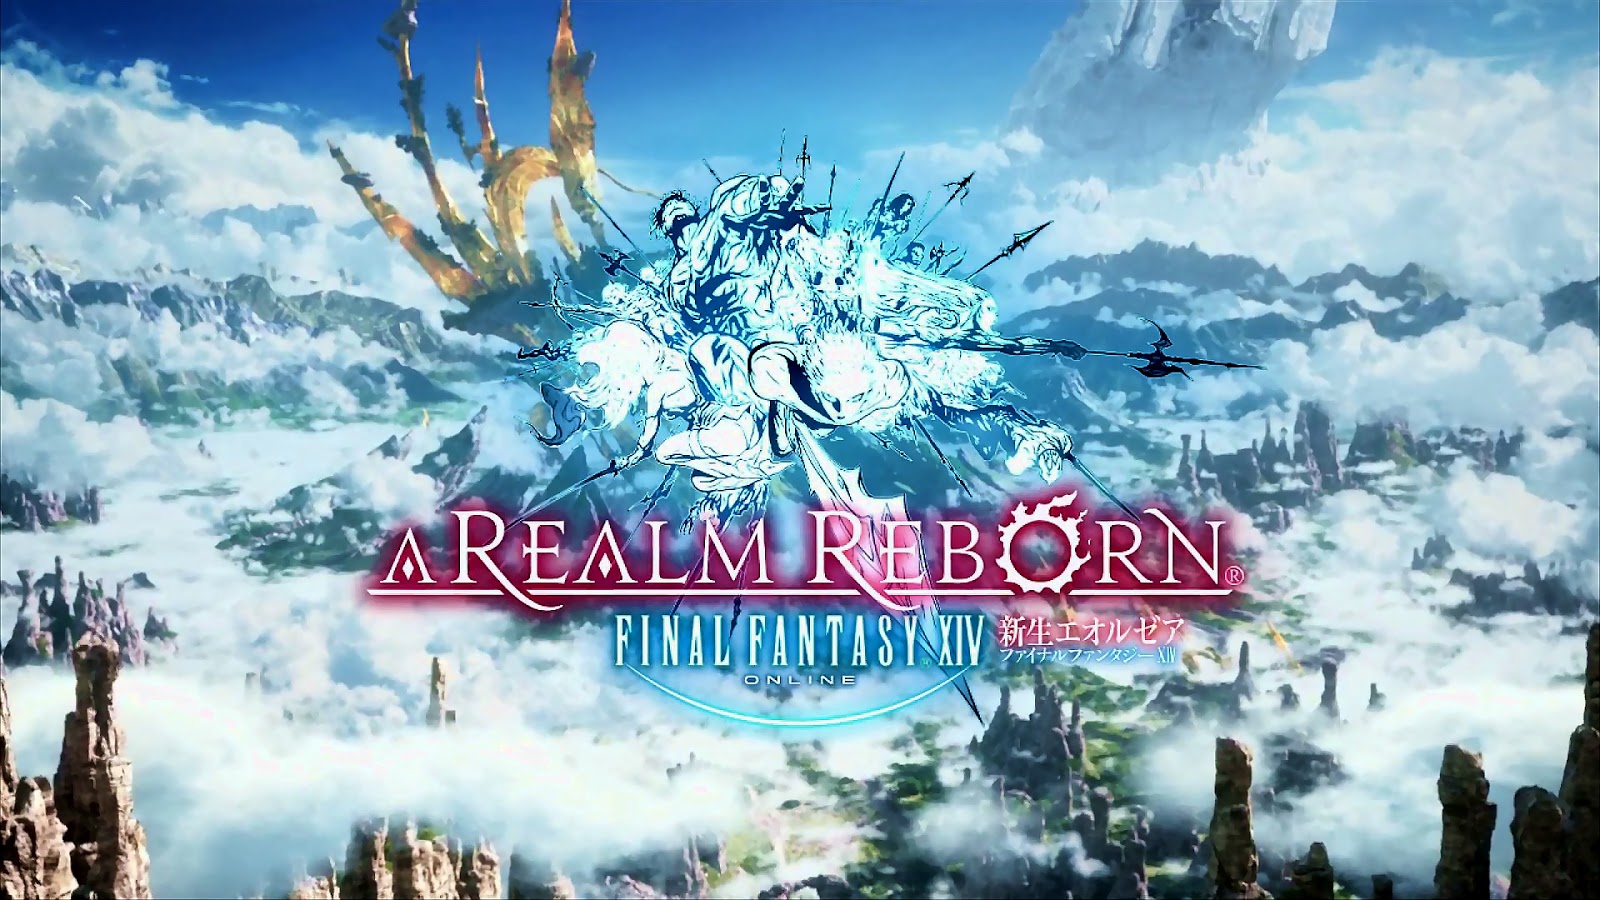 final-fantasy-xiv-a-realm-reborn-free-trial-lands-on-ps4-godisageek